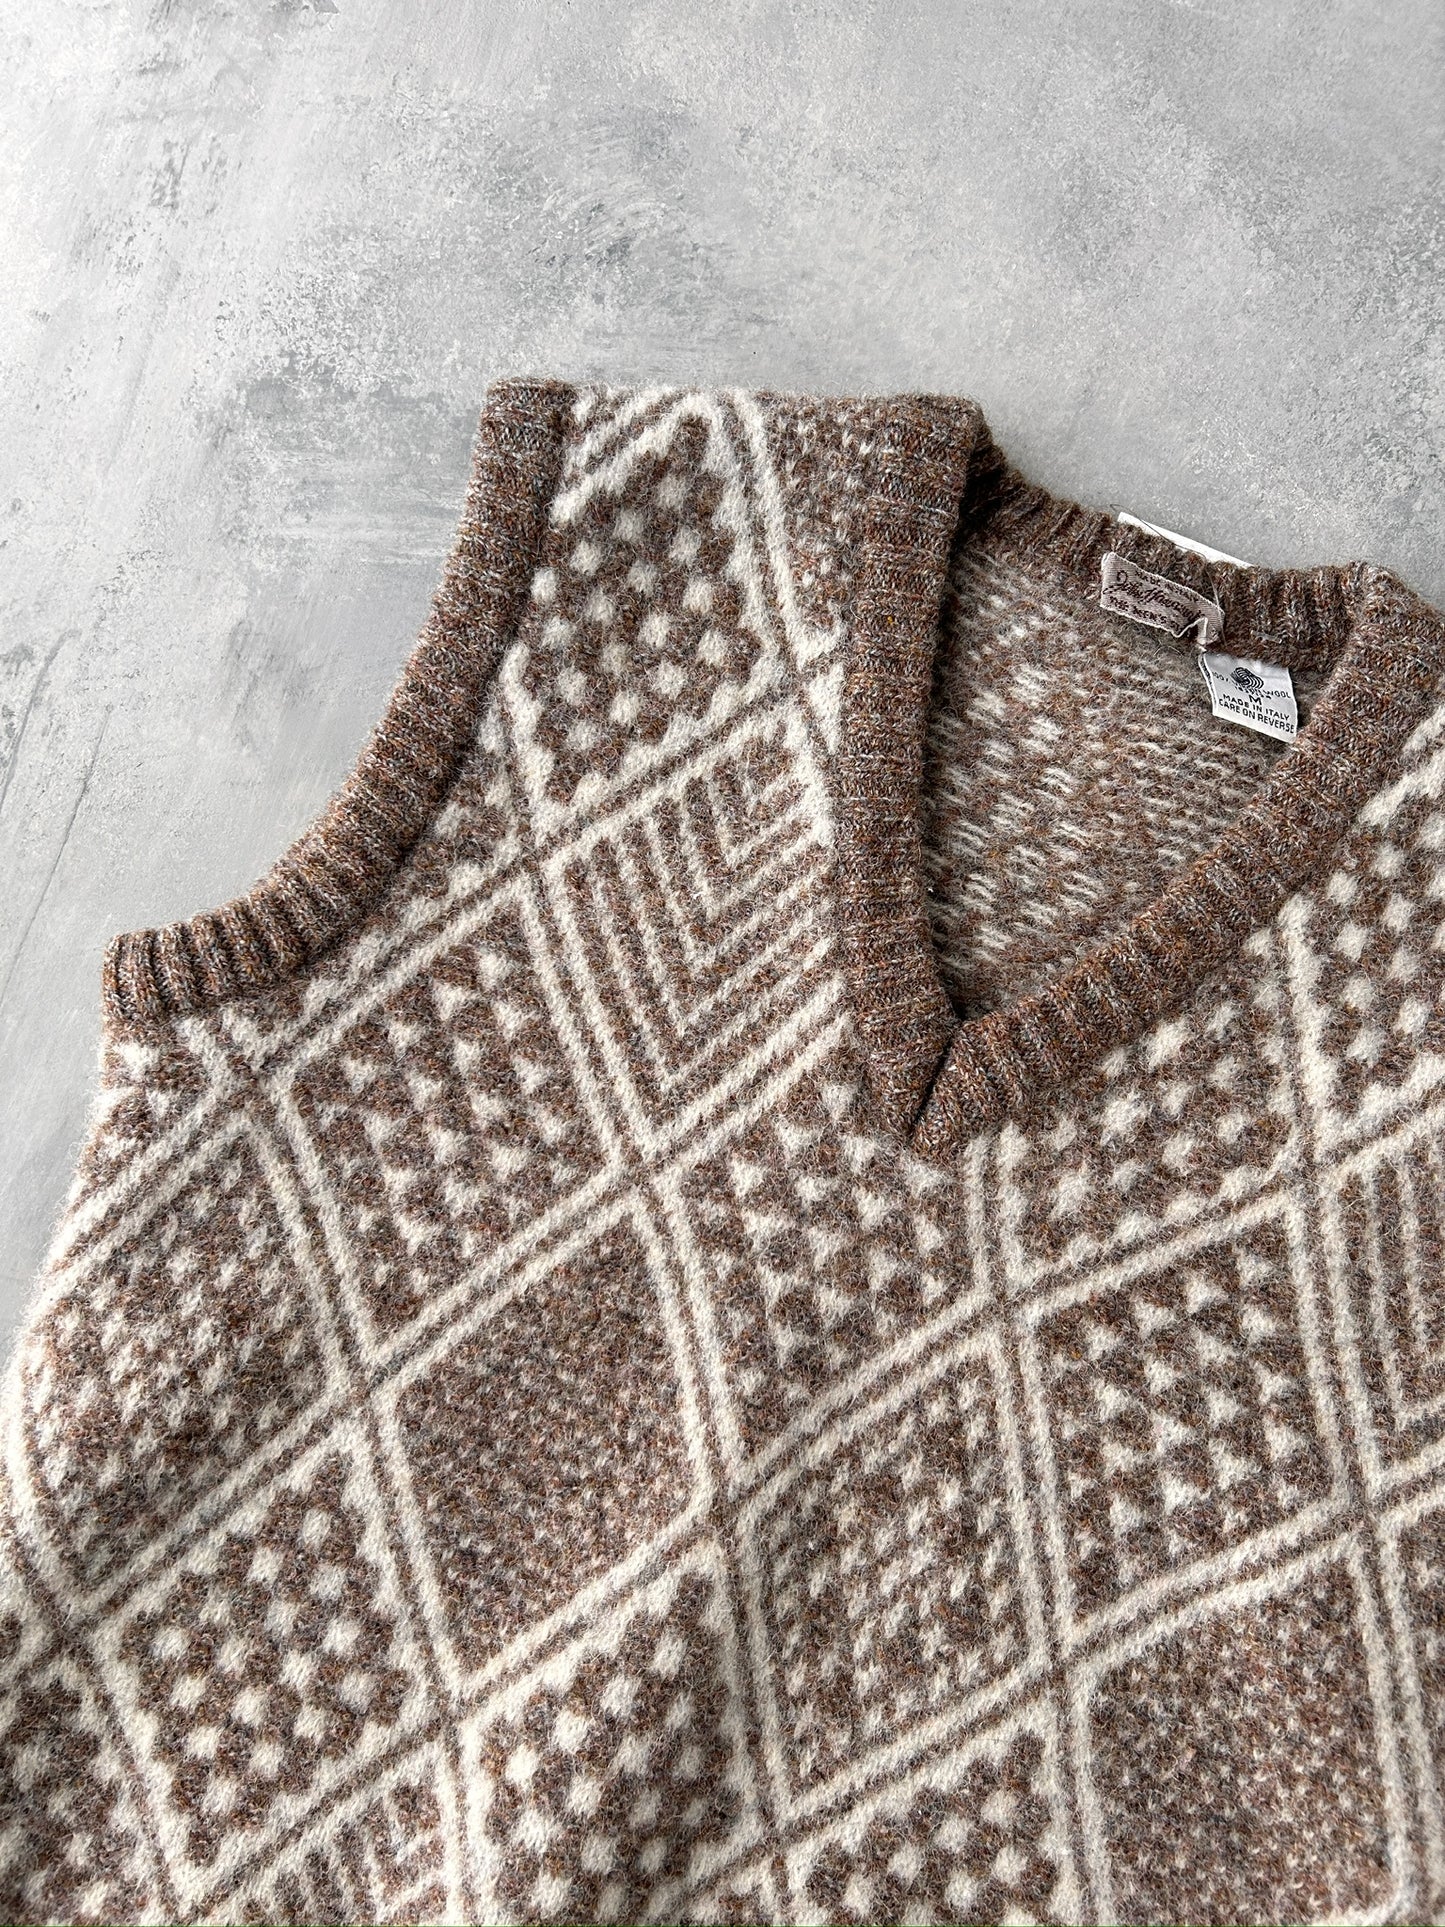 Wool Sweater Vest 70's - Medium